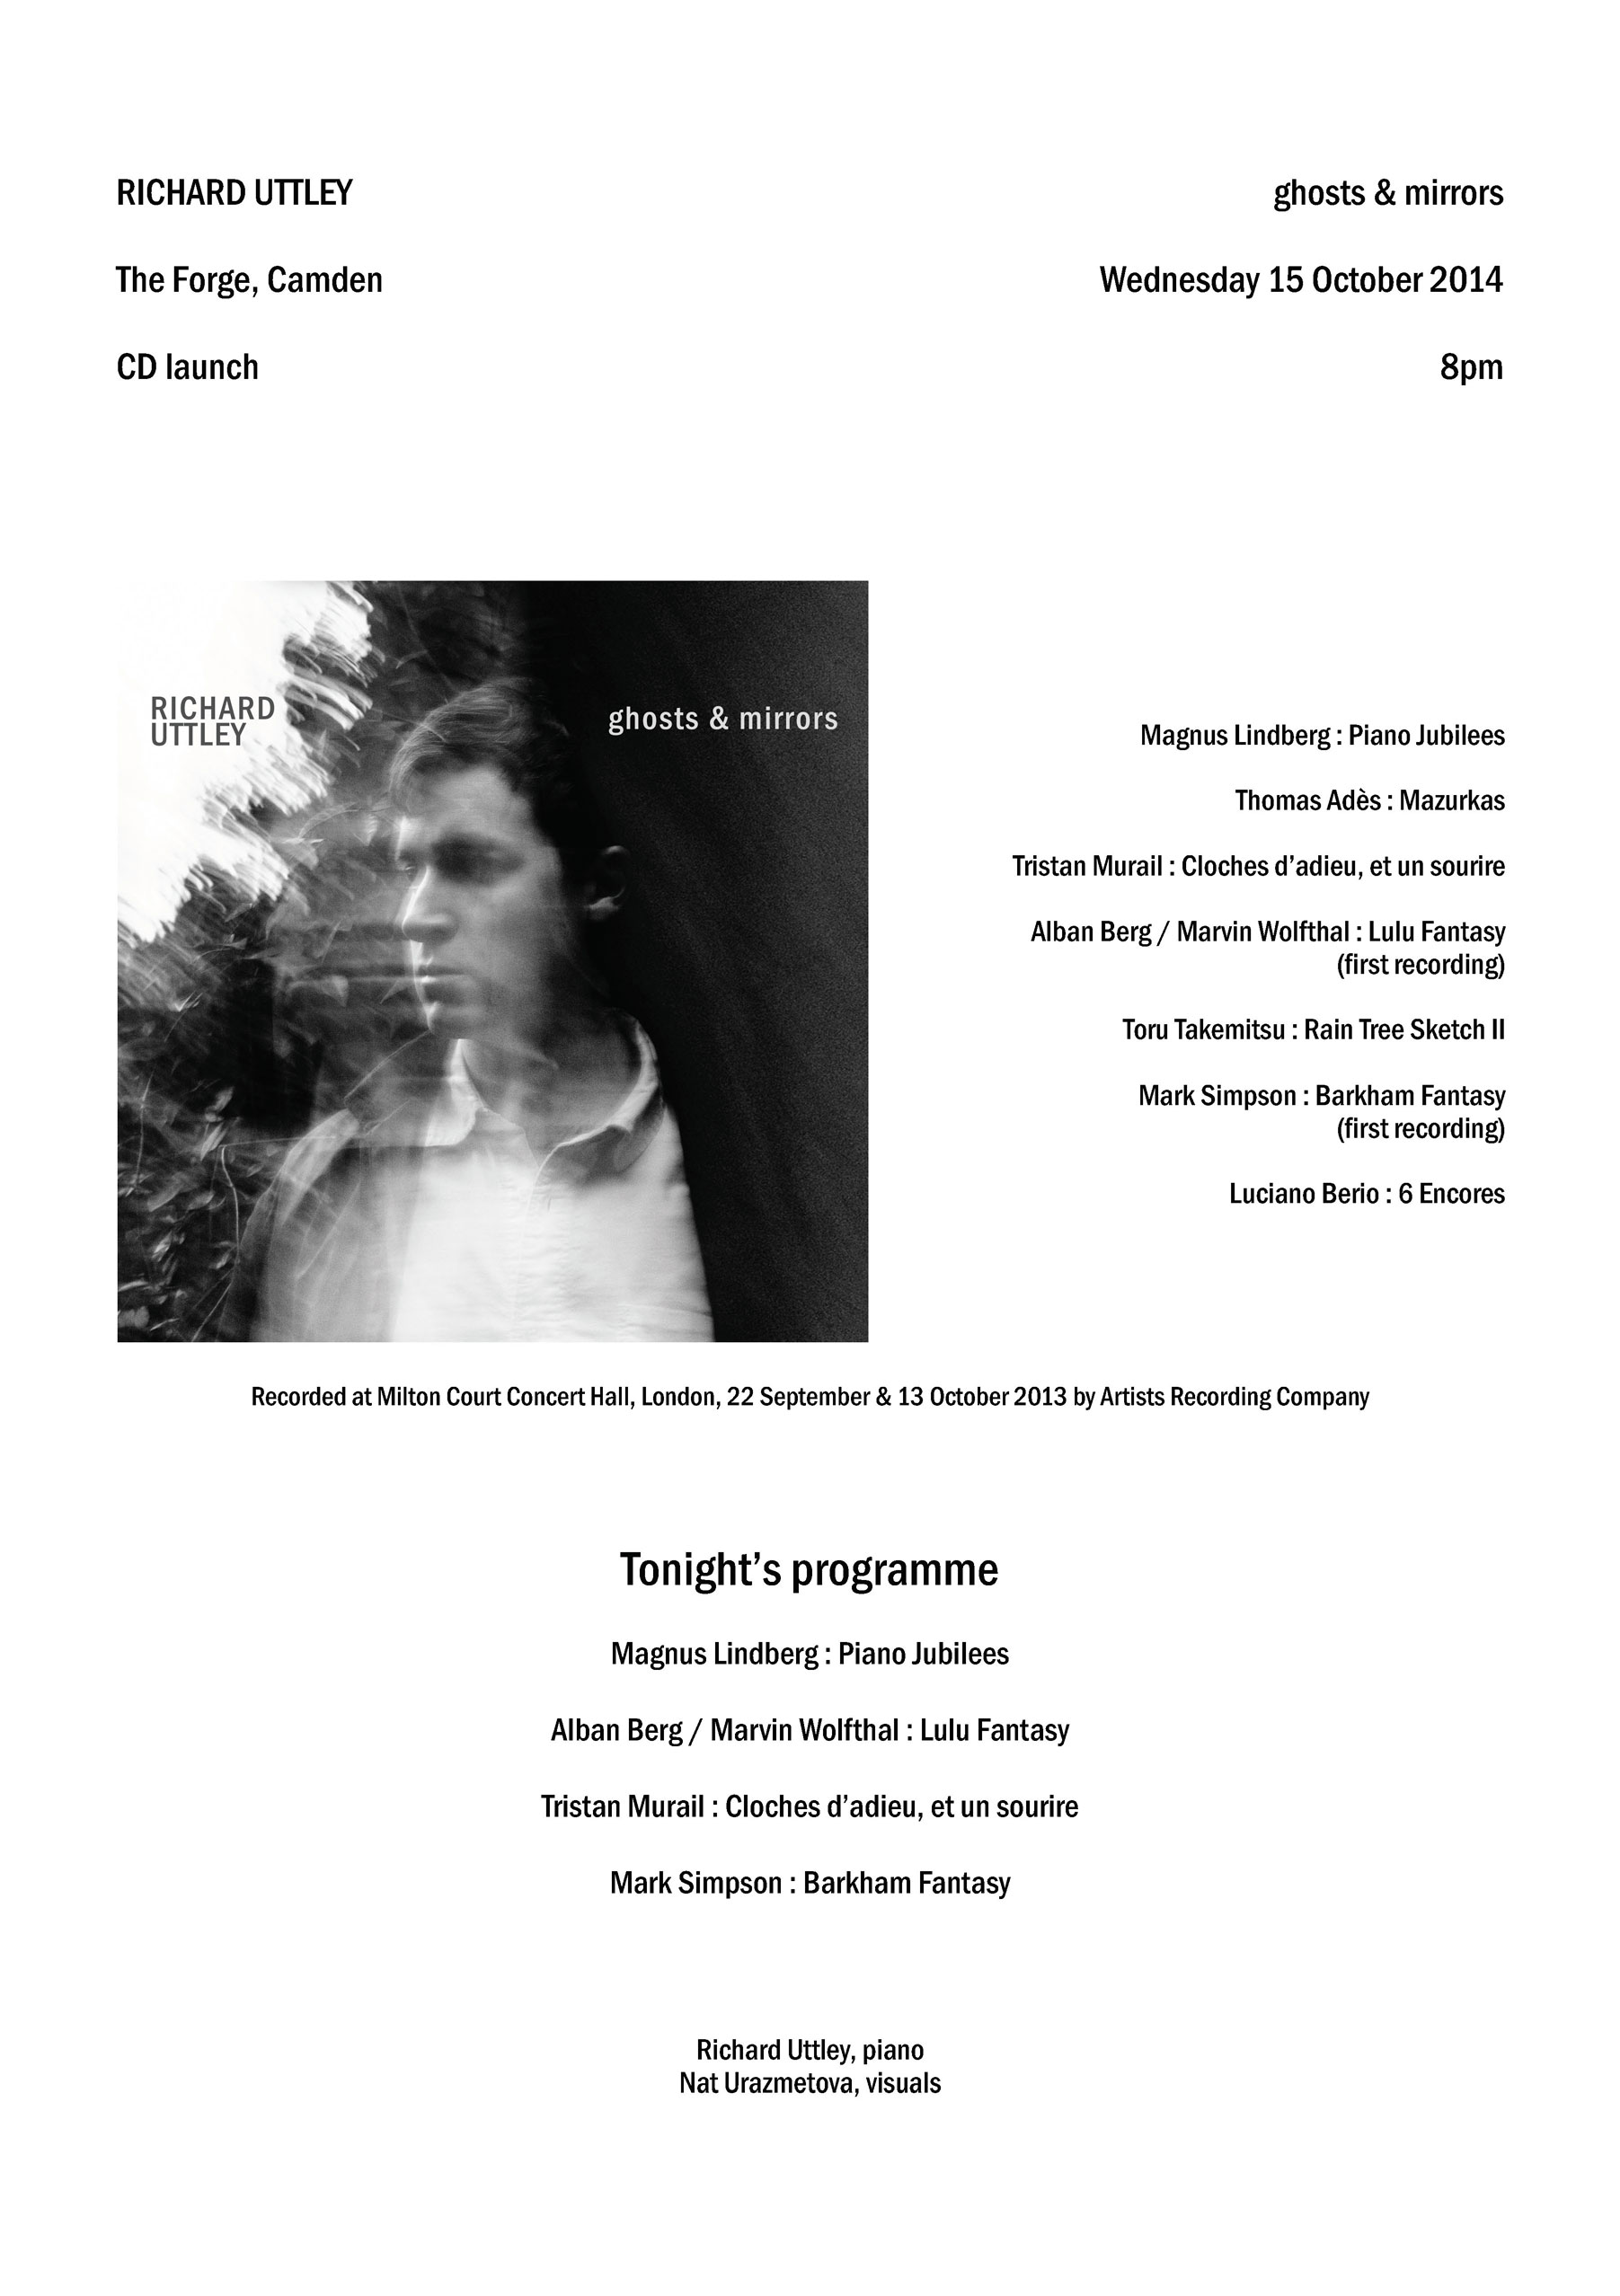 Programme, 2014, CD launch, p1